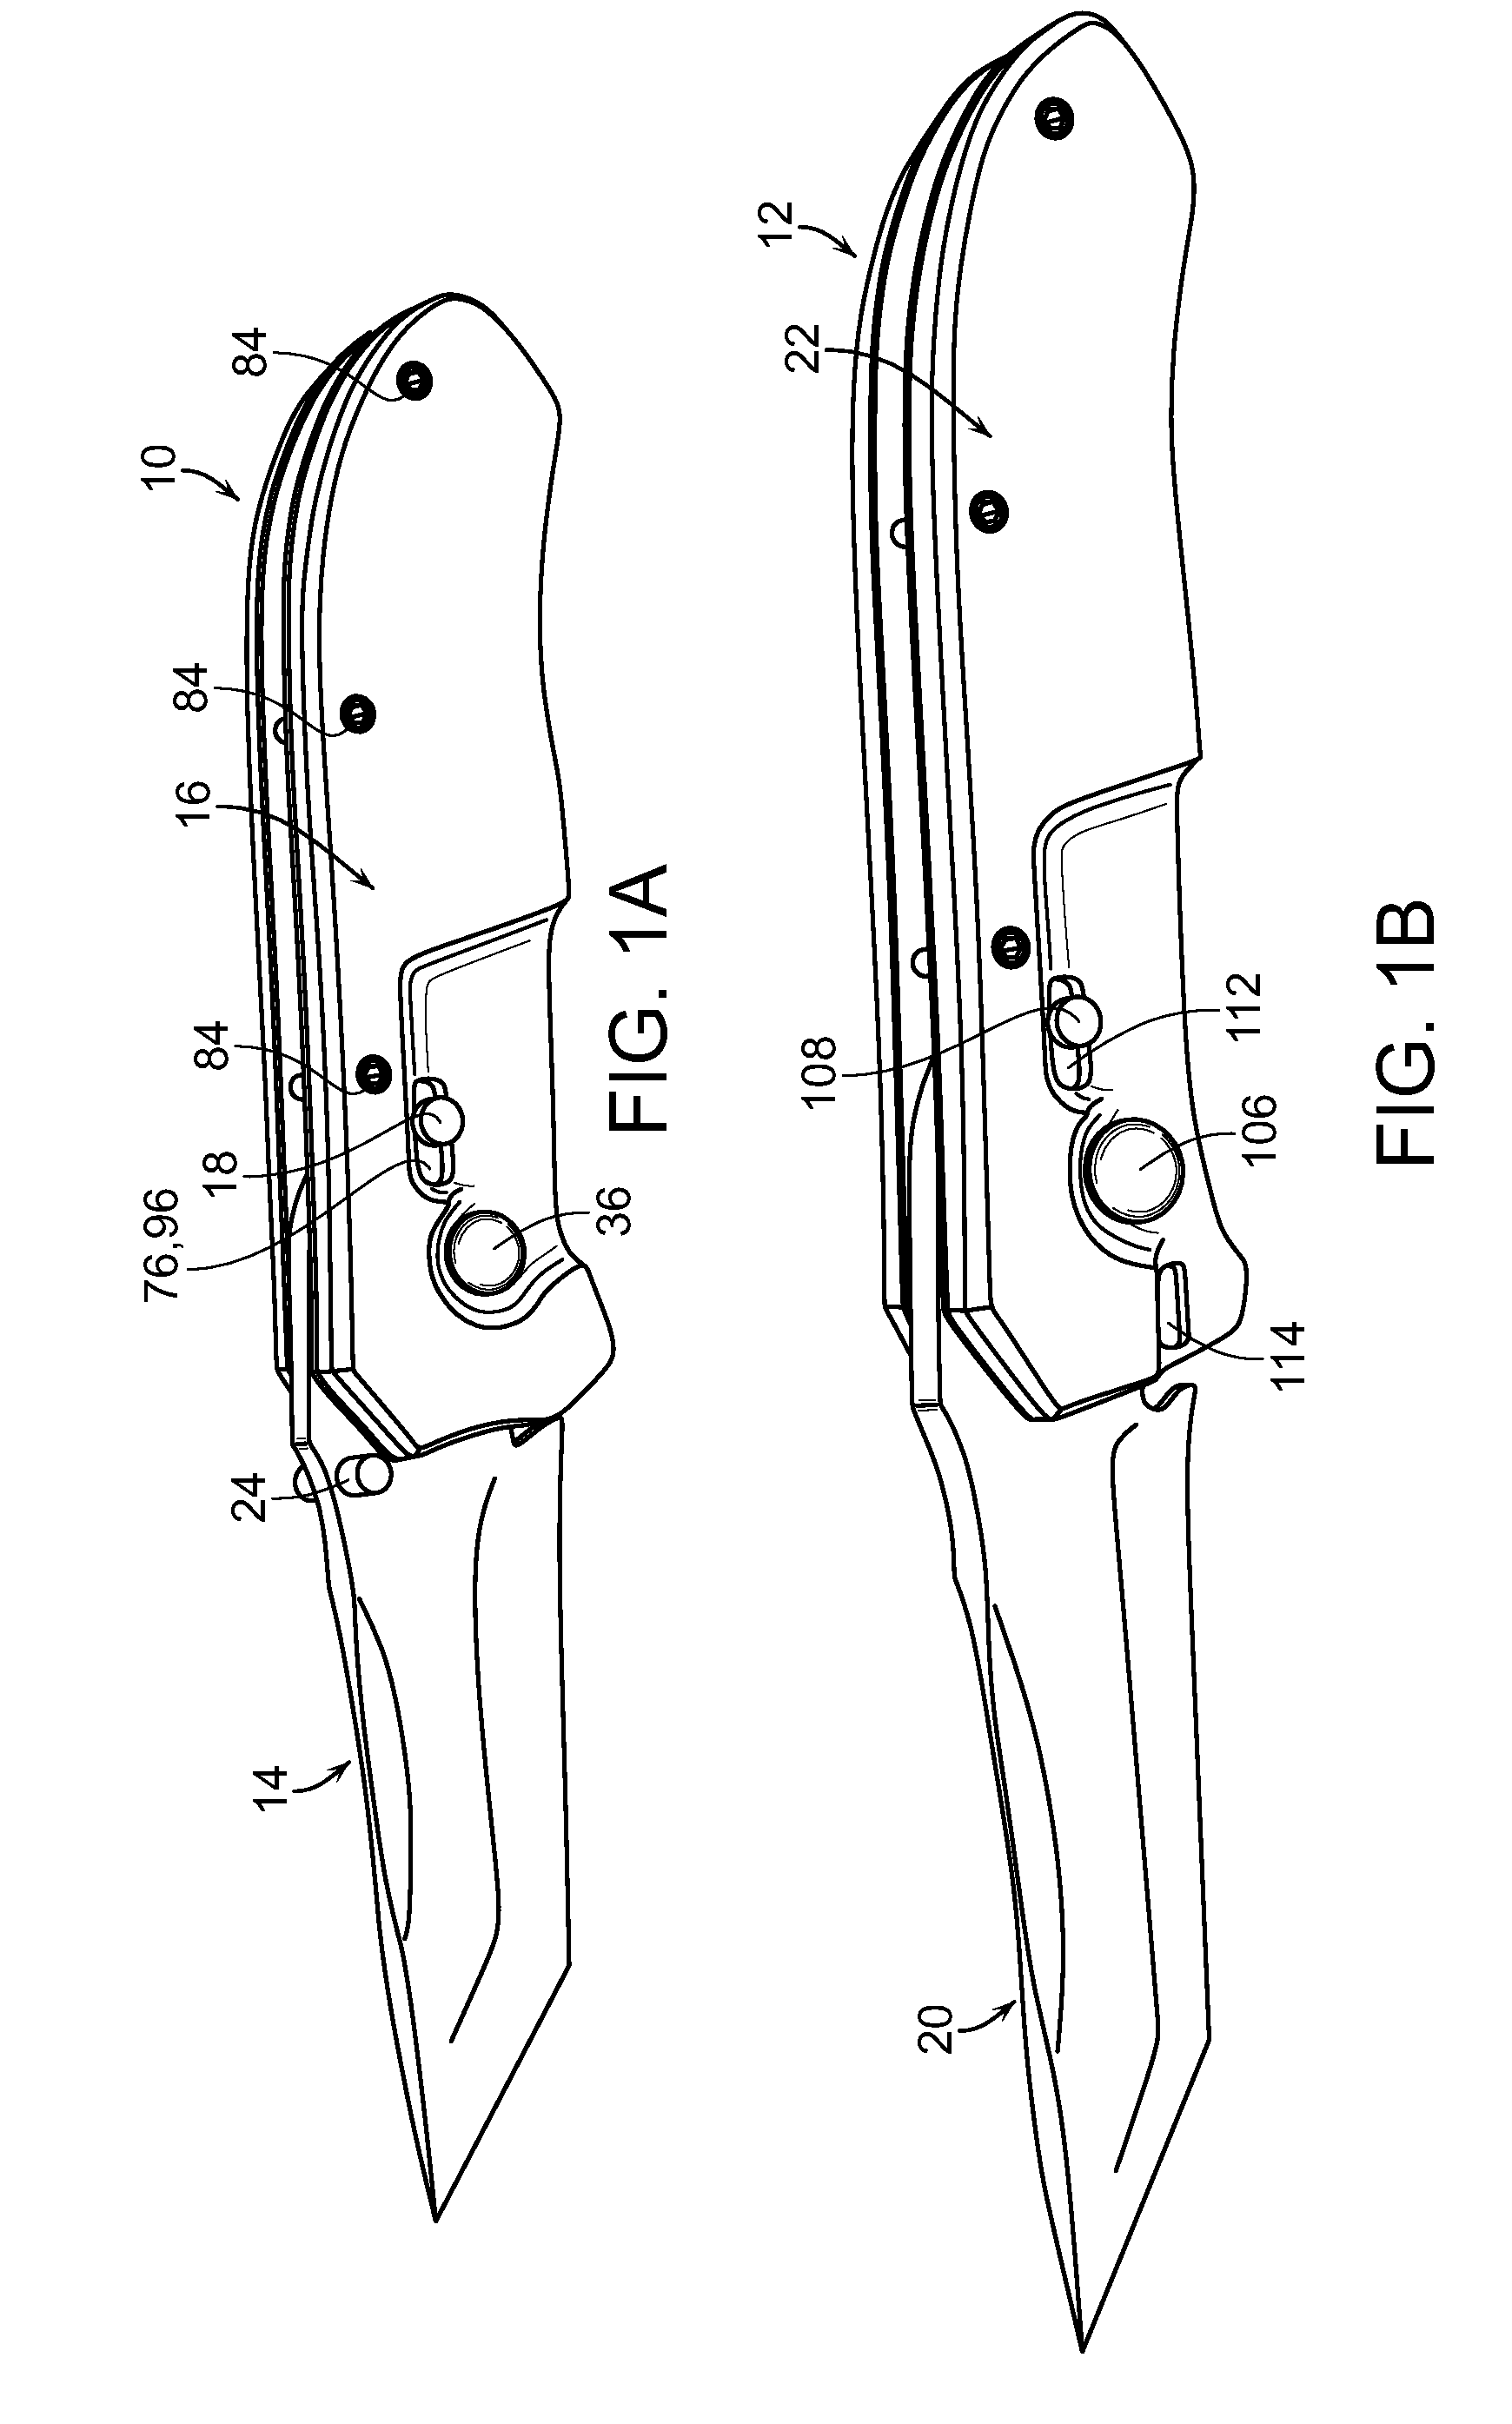 Folding assemblies with locking mechanism